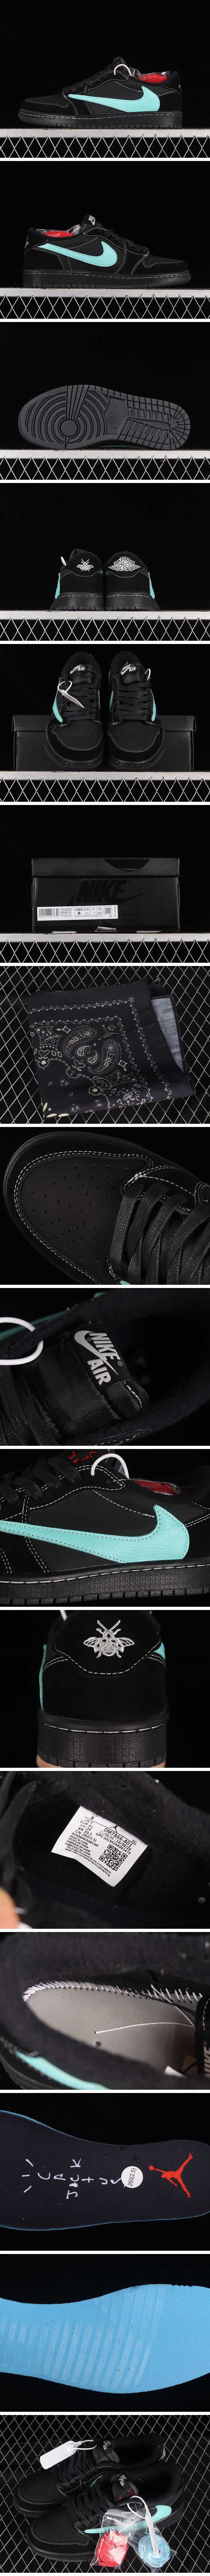 Travis Scott x Nike Air Jordan 4 Retro Customised Sneaker 